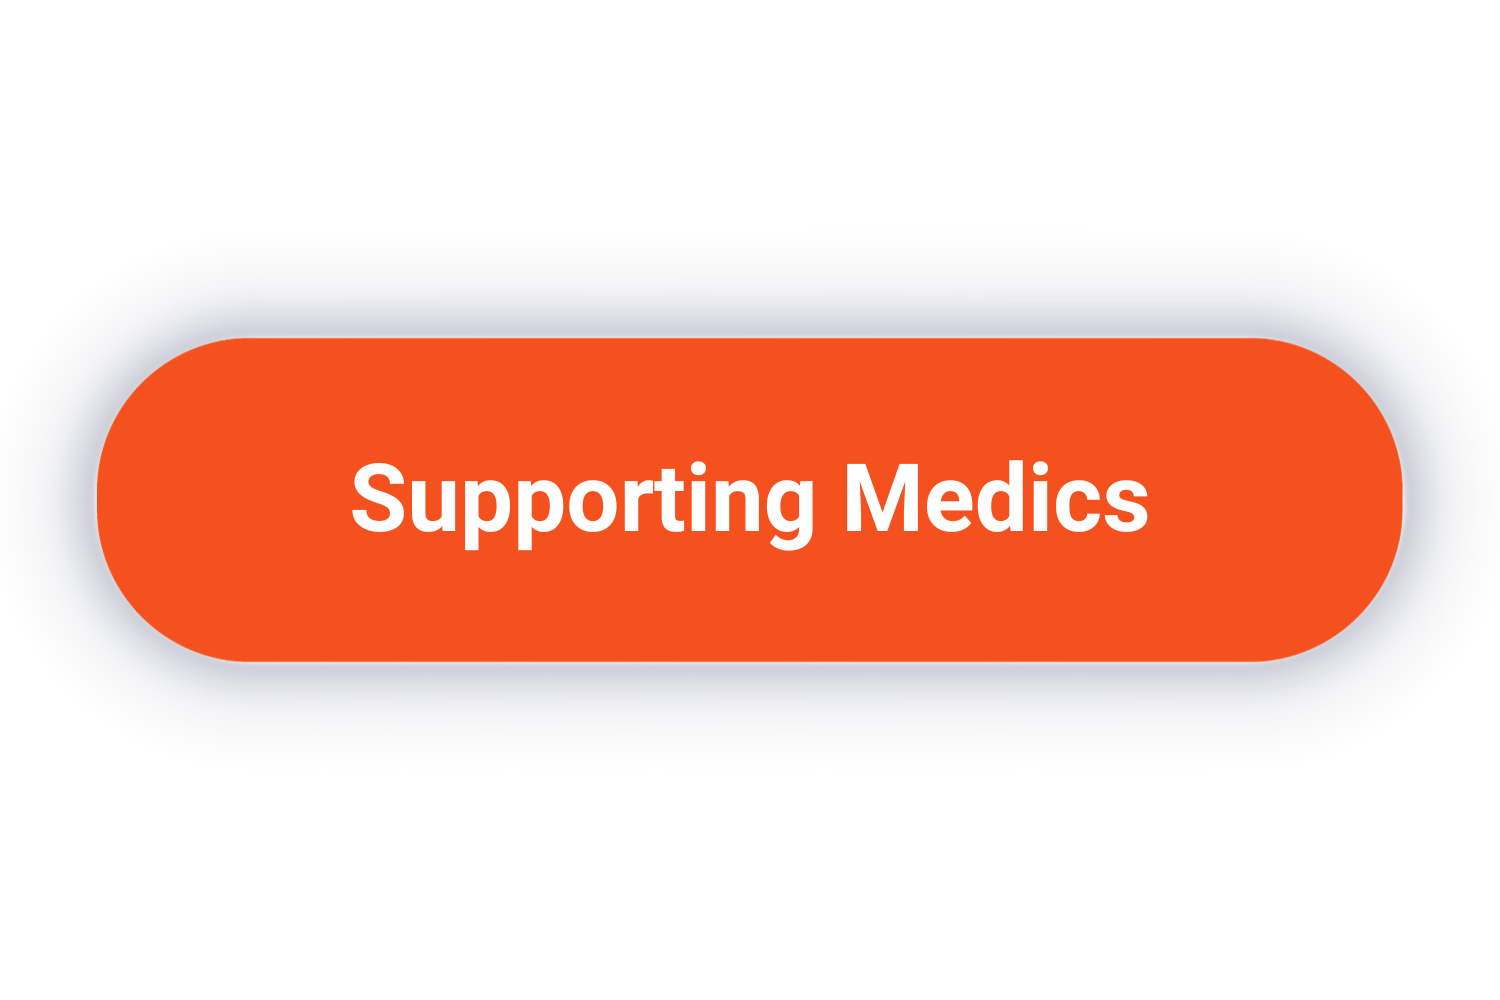 Supporting Medics